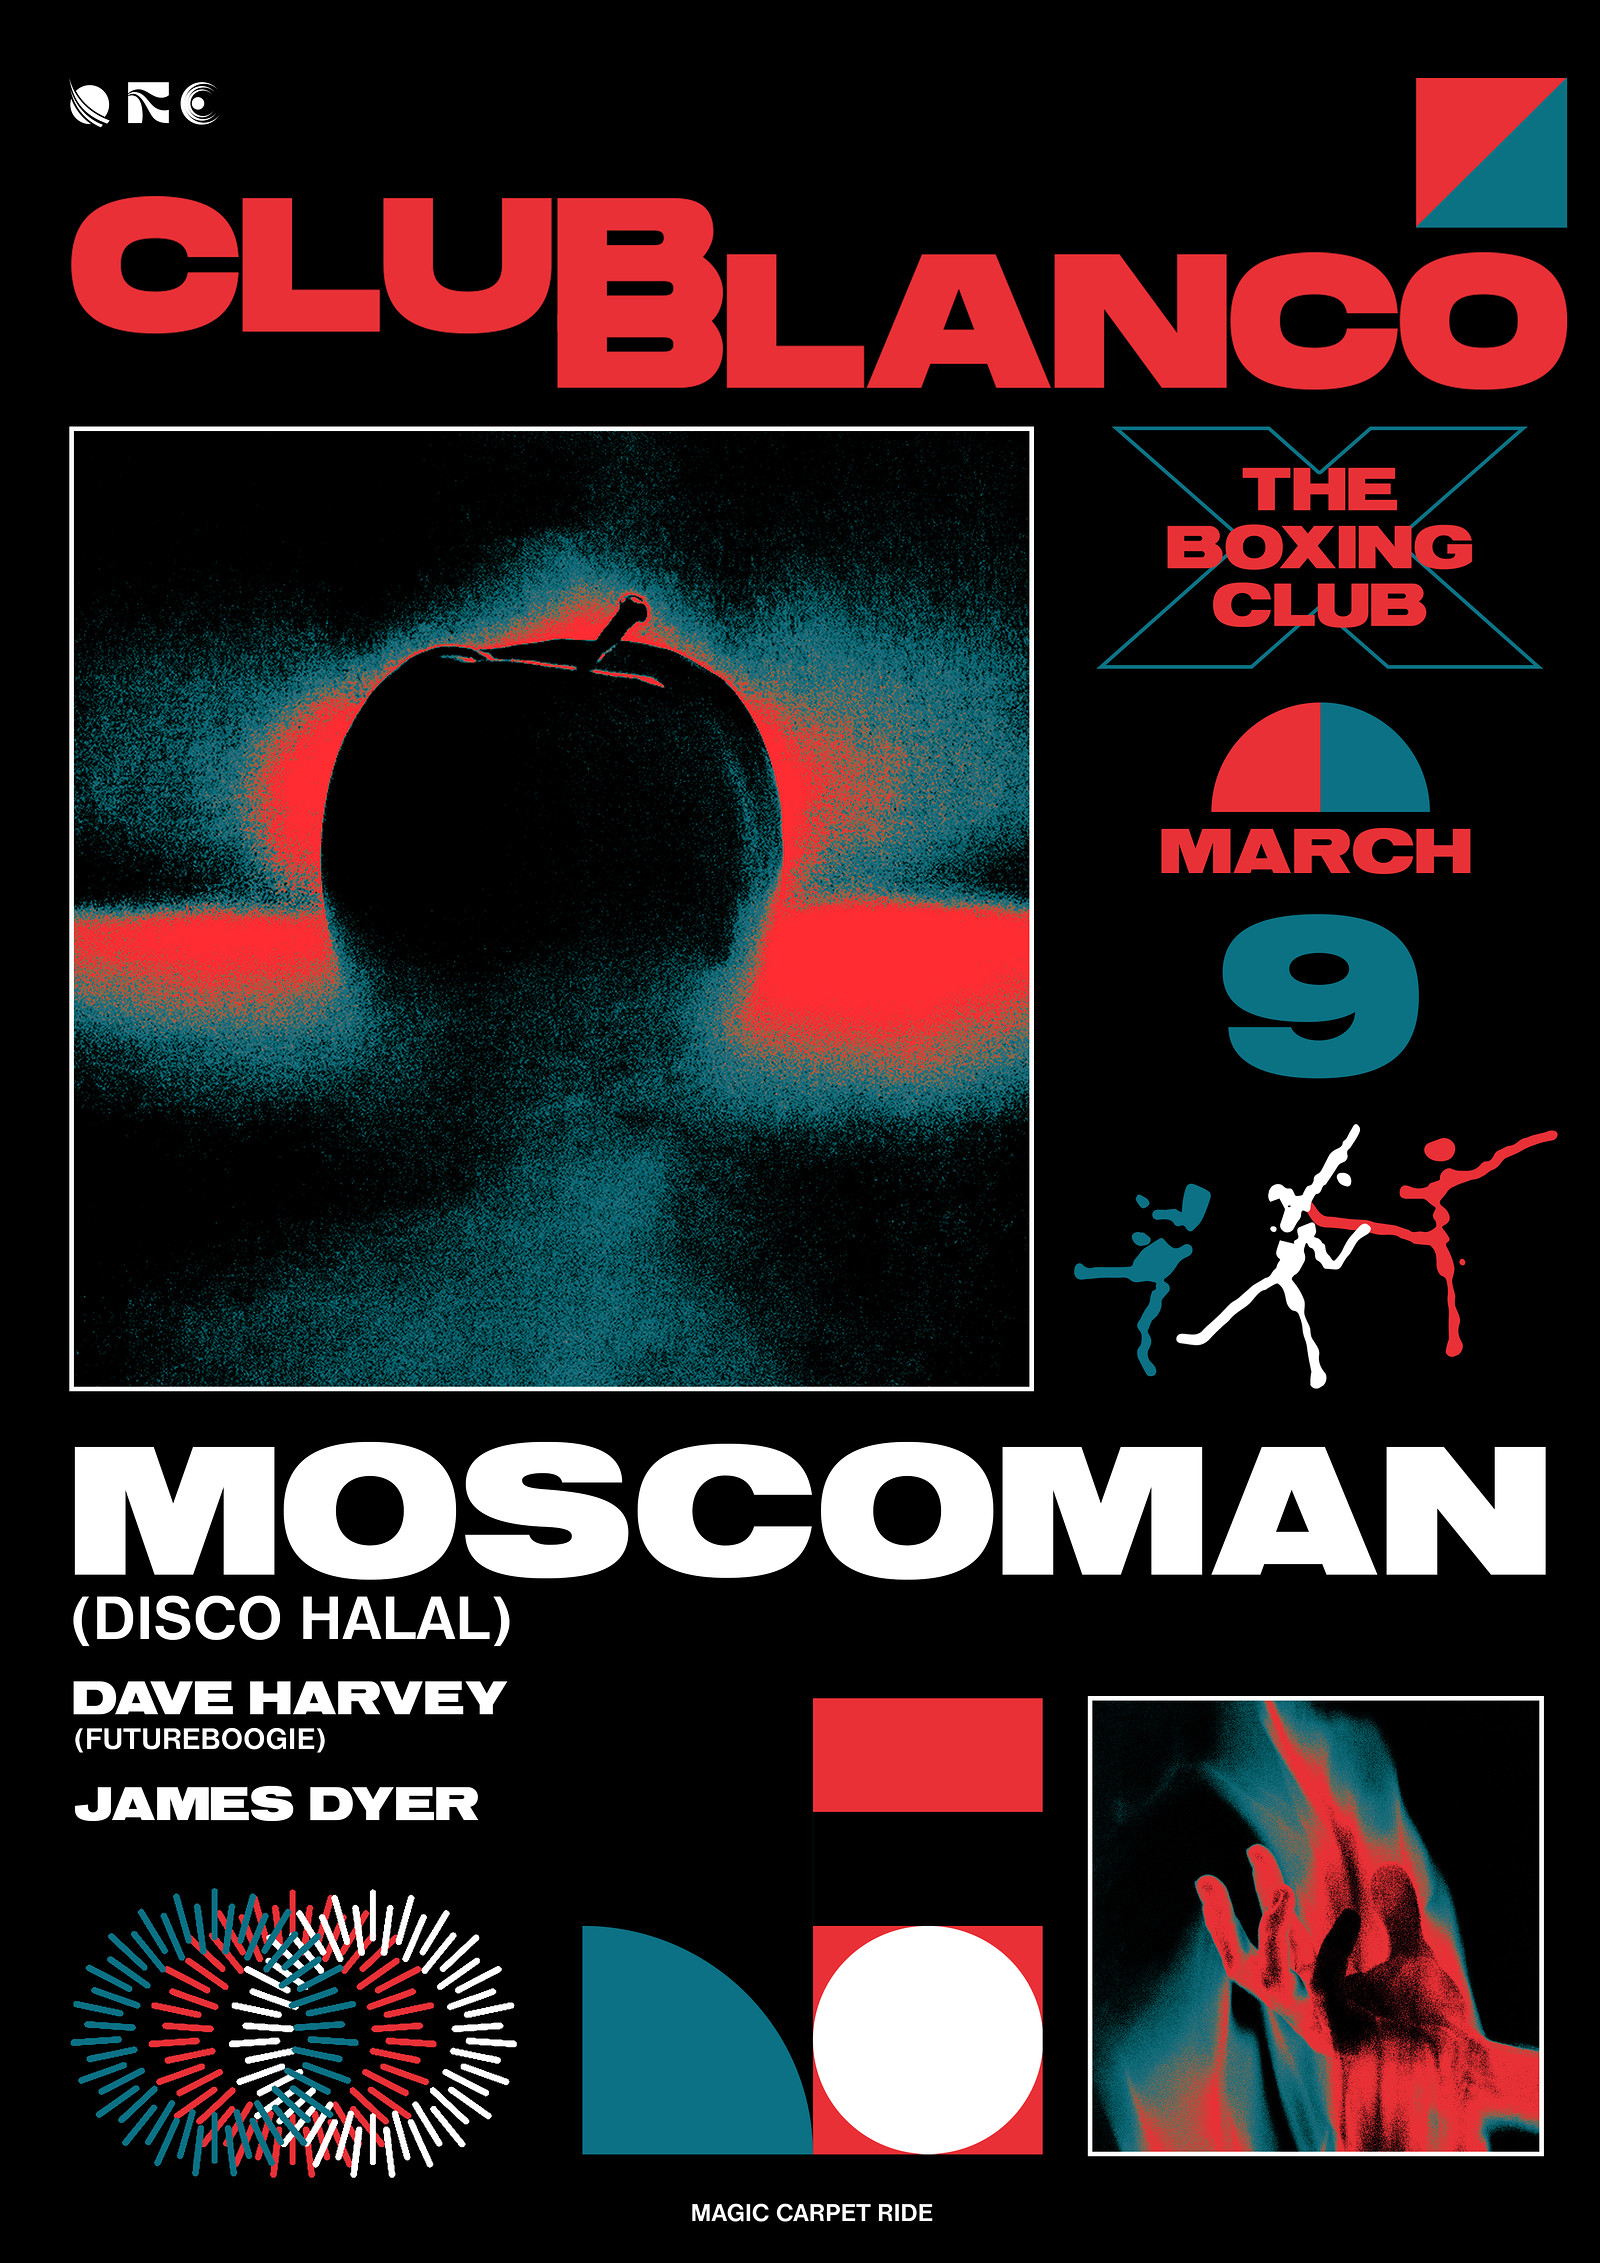 Club Blanco w/ Moscoman at The Boxing Club